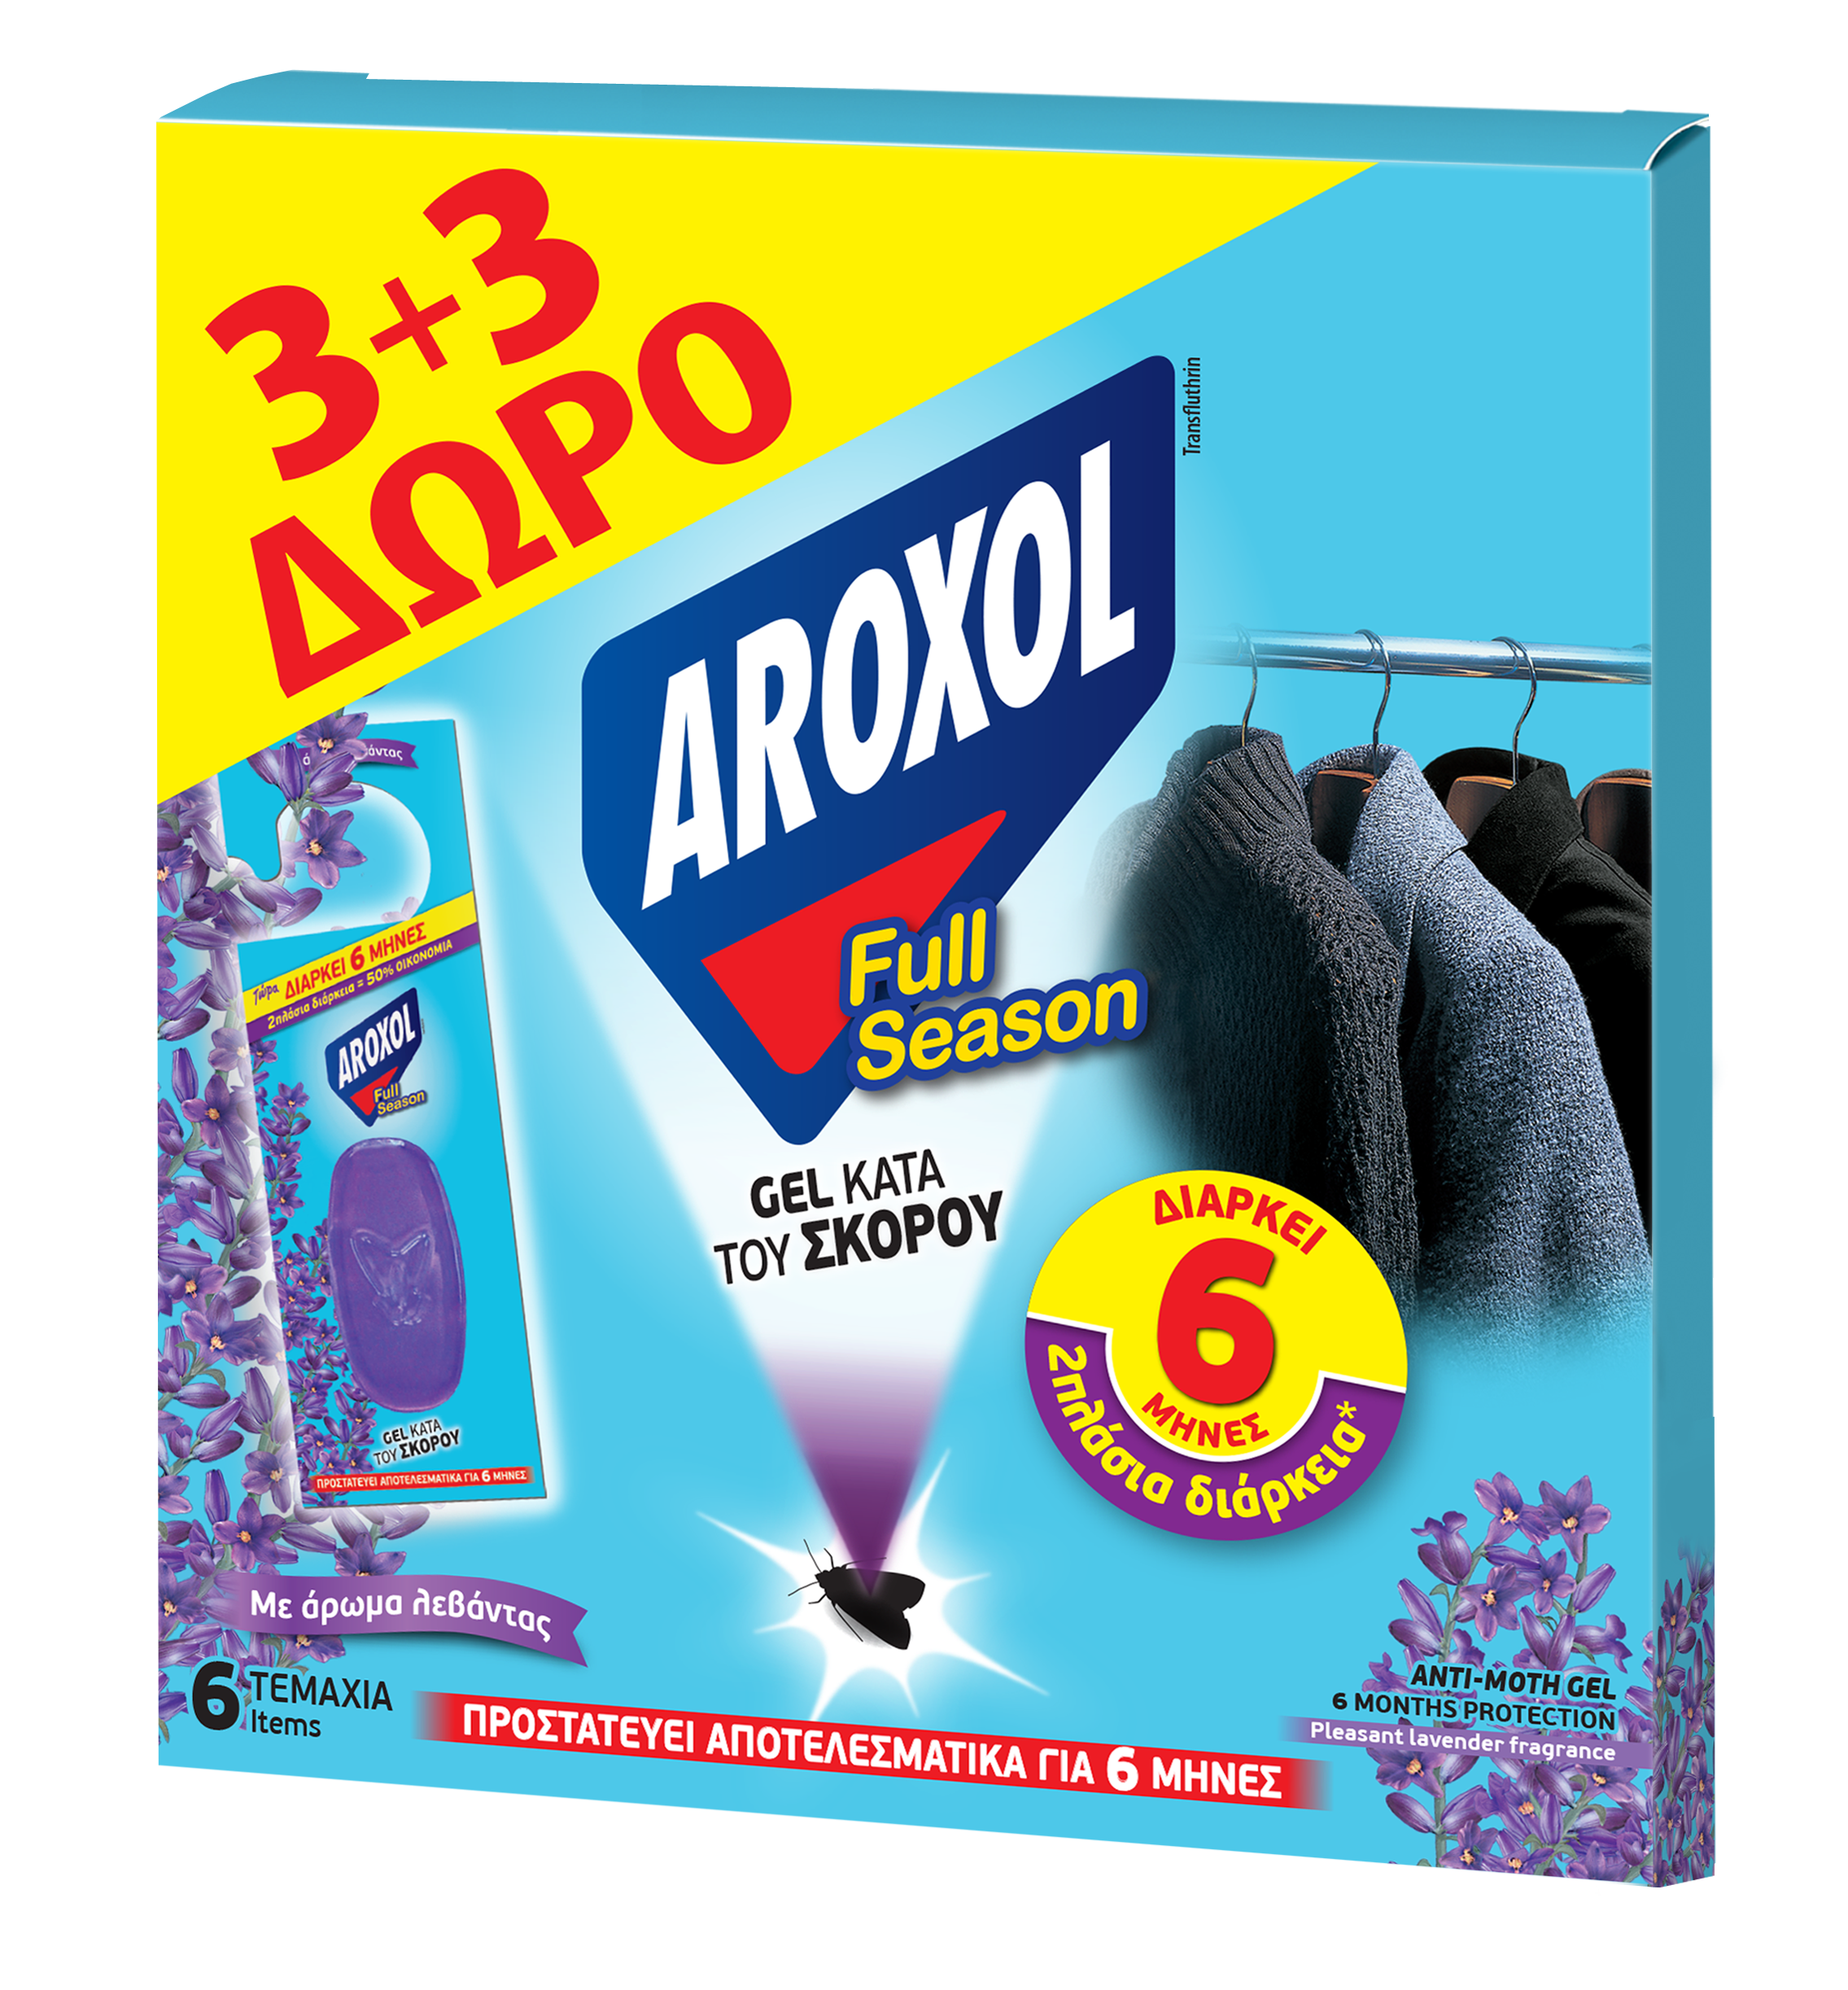 AROXOL FULL SEASON ΣΚΟΡΟΚΤΟΝΑ GEL 3+3